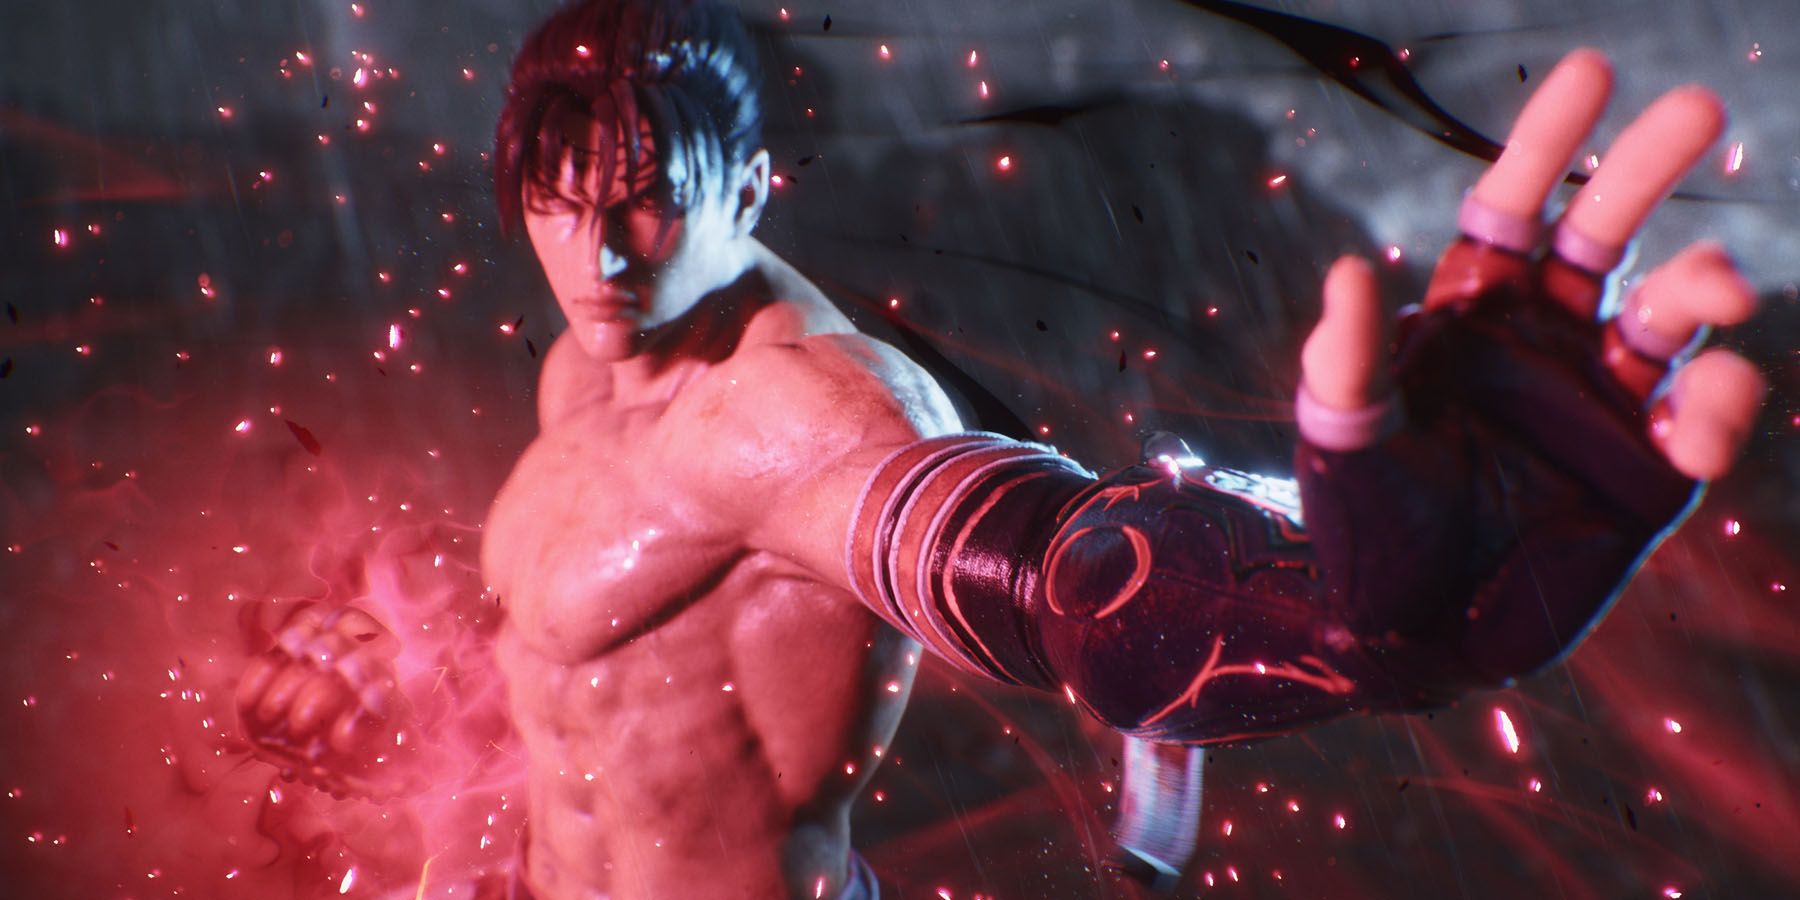 Tekken 8's newest game-mode is Arcade Quest! It'll allow players